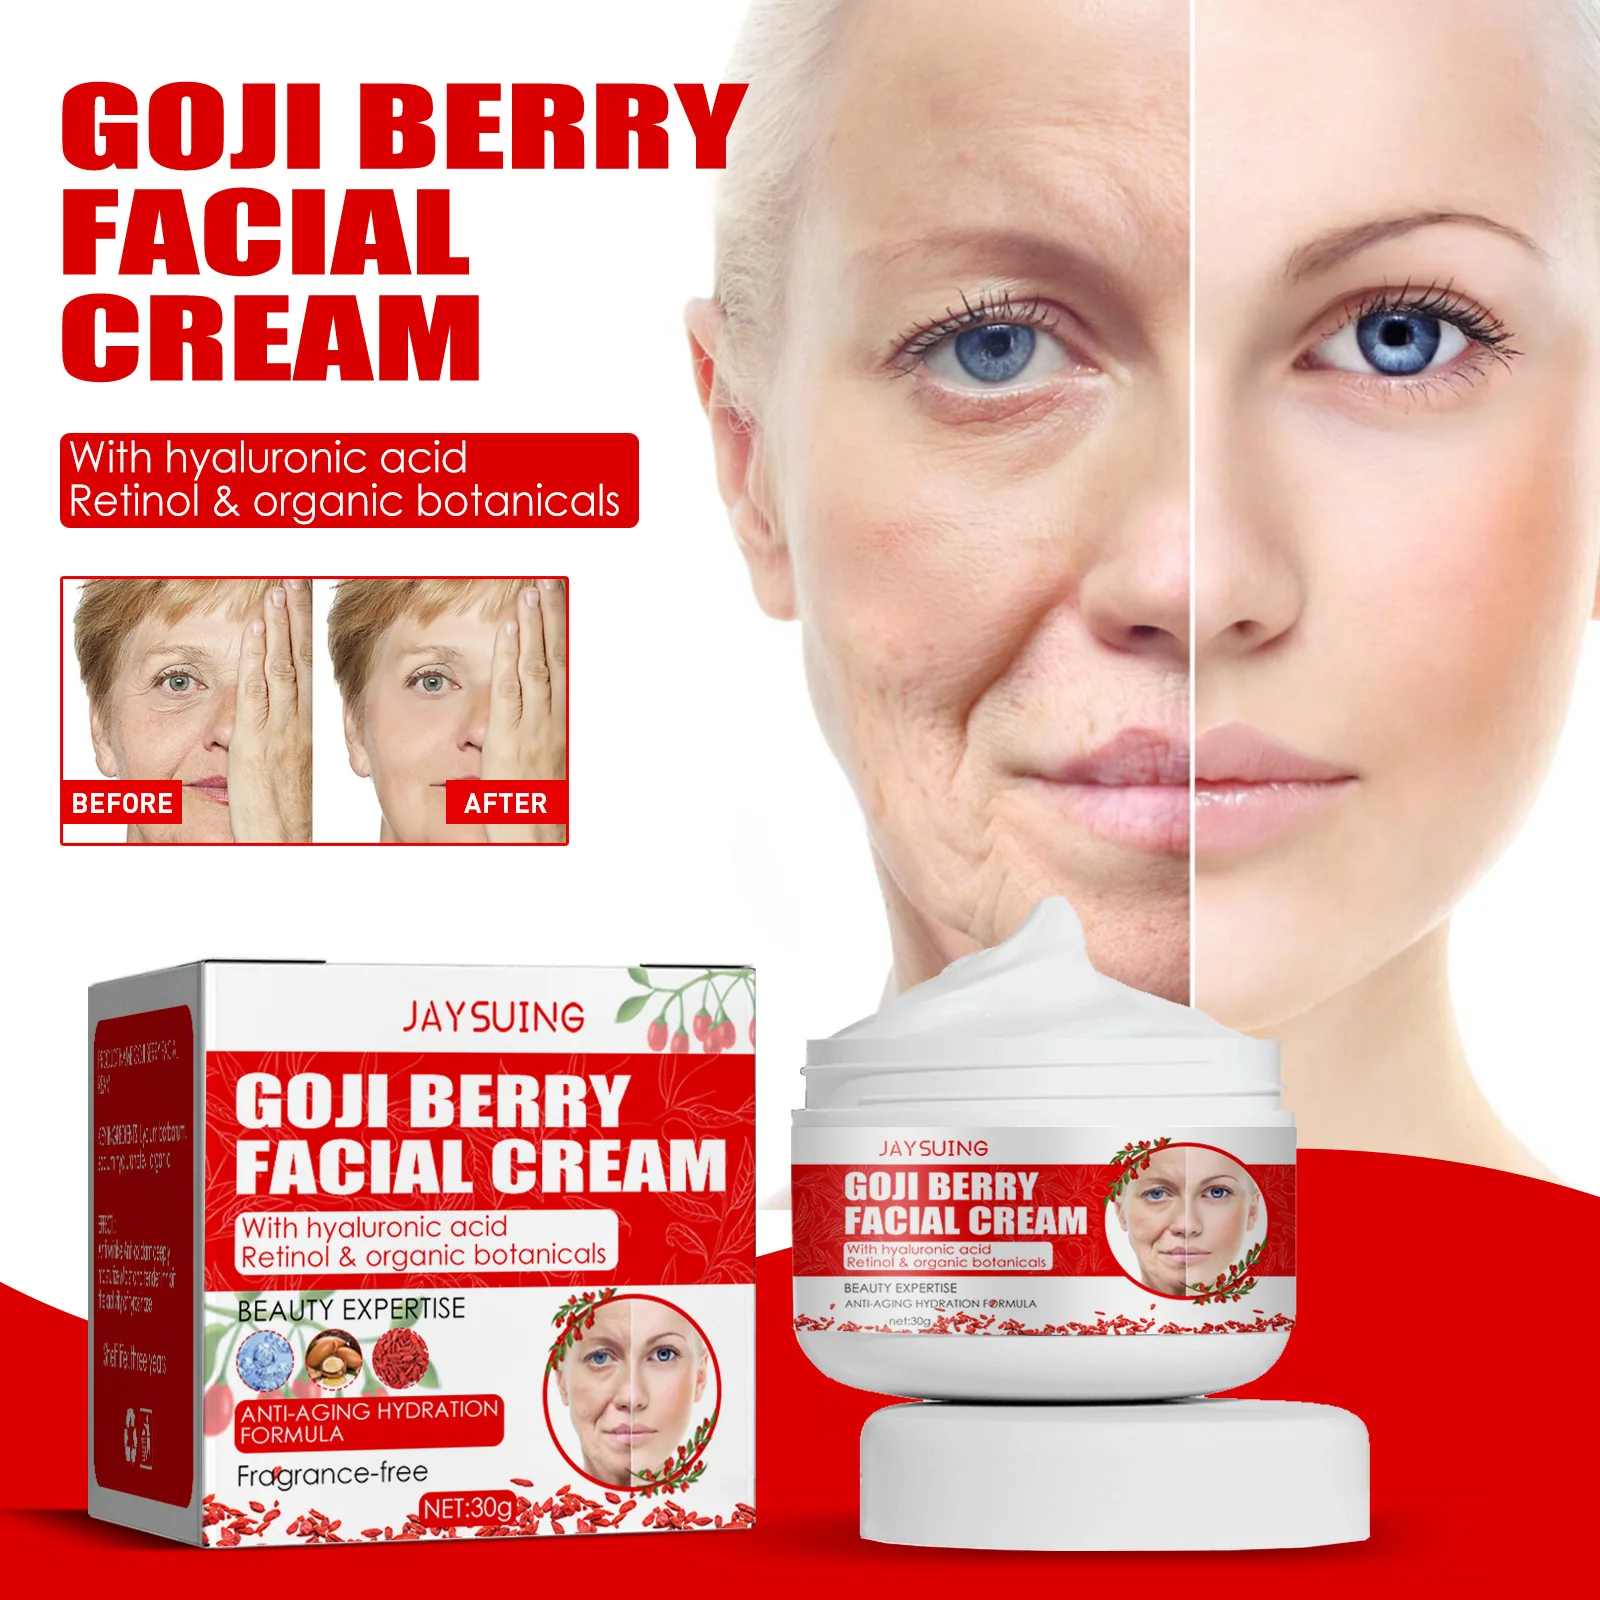 

Goji Berry Face Cream Whitening Anti Aging Firming Skin Care Wrinkle Remove Hyaluronic Acid Retinol Facial Tightening Lotion